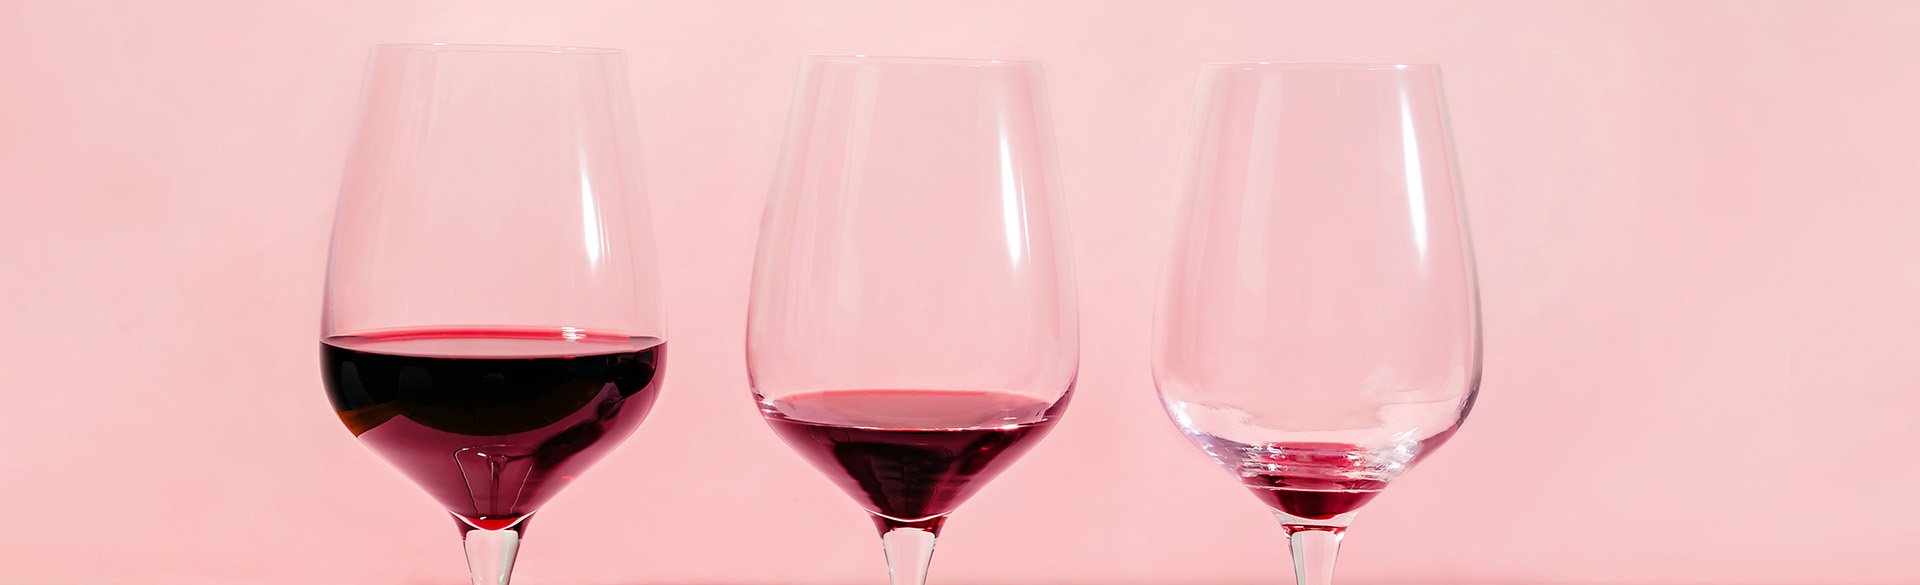 Three wine glasses with decreasing volumes of red wine